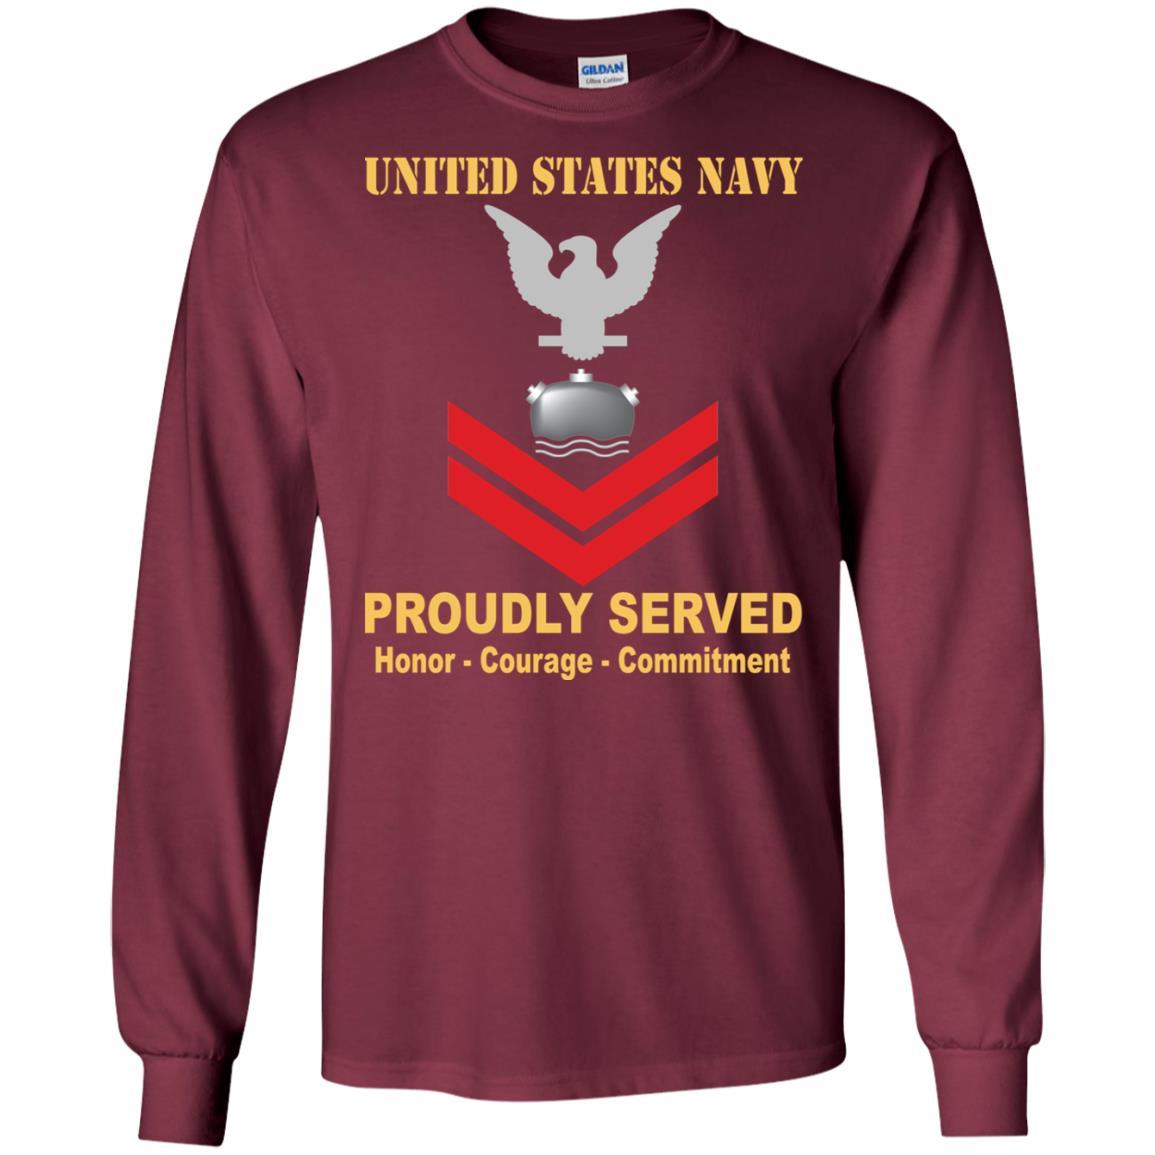 Navy Mineman Navy MN E-5 Rating Badges Proudly Served T-Shirt For Men On Front-TShirt-Navy-Veterans Nation